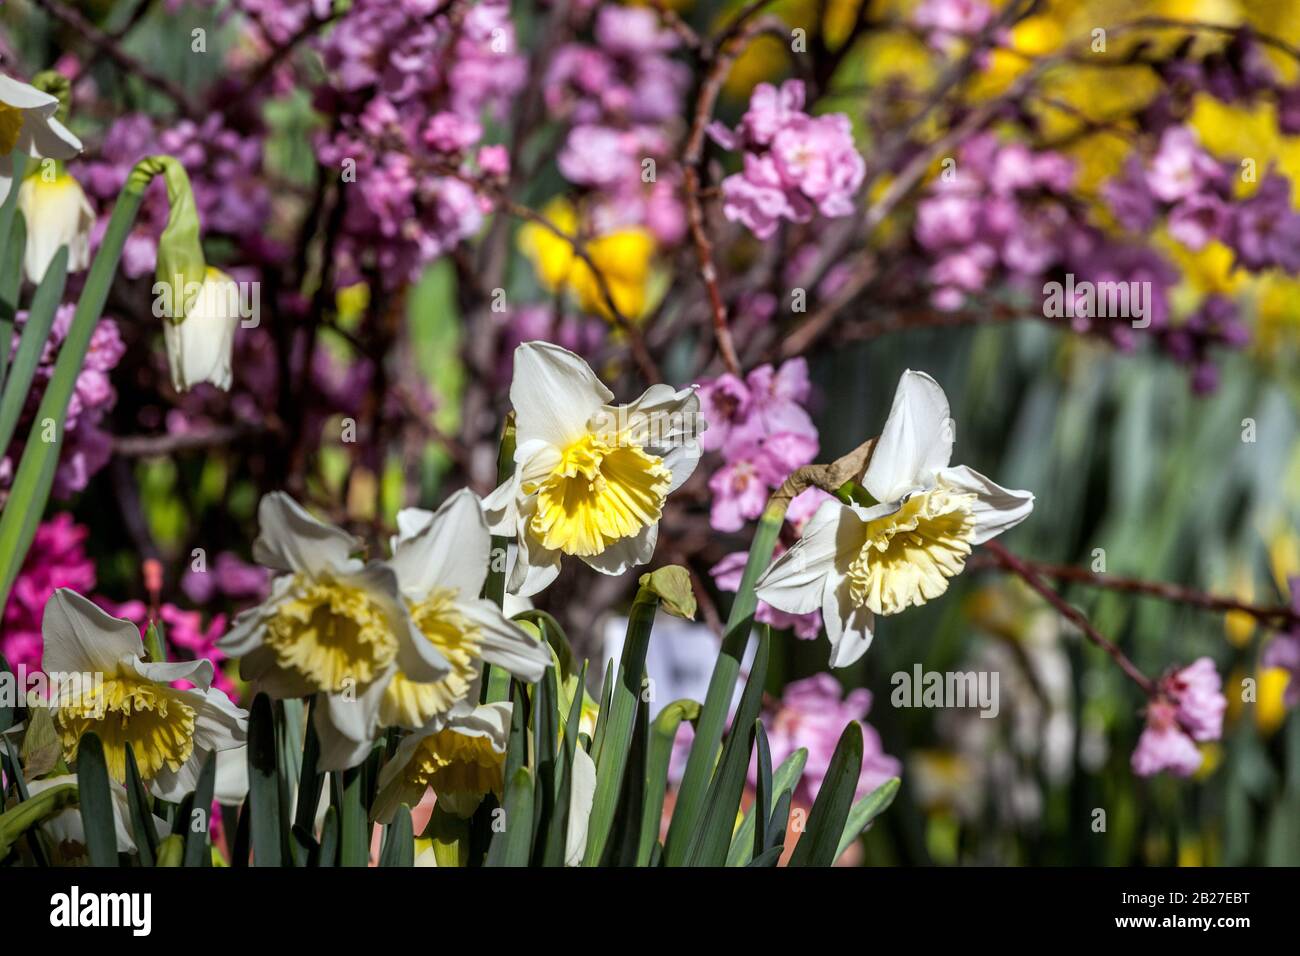 Die farbenprächtigen Frühlingsblüten Farbenprächtige Frühlingsblumen, gemischte Narzissen prunus in Blüte, atemberaubende Pflanzenfarbenkombinationen Stockfoto